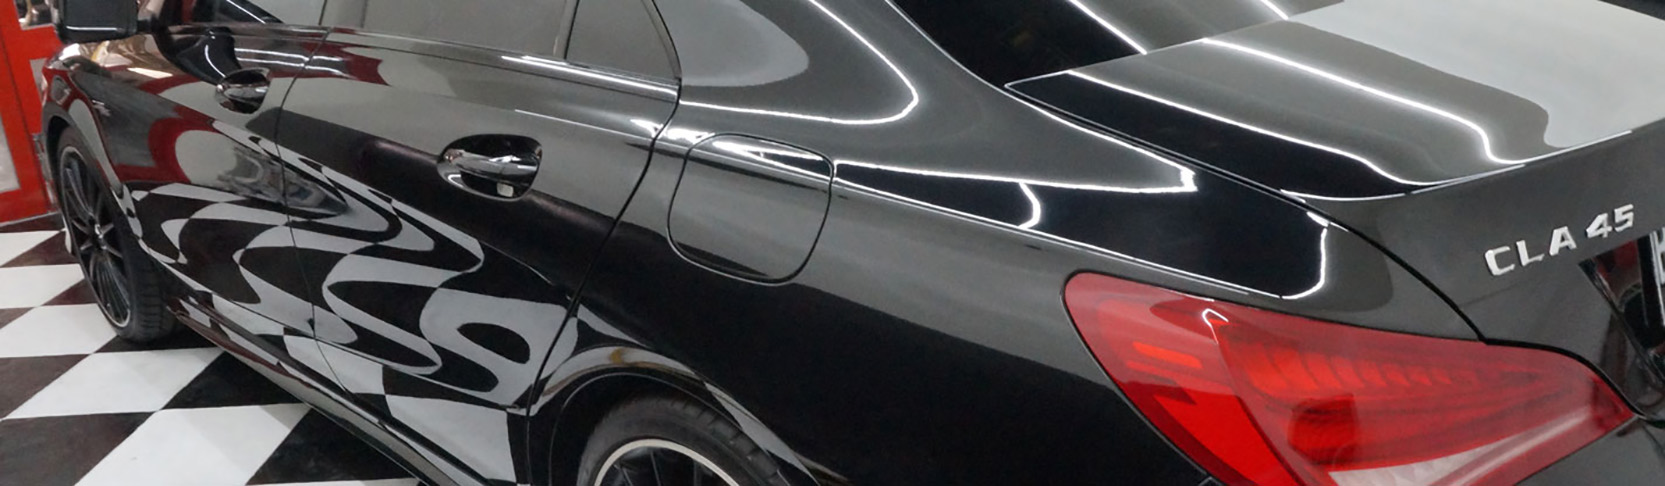 CS-II Paint Protection Swirl Mark on Car Body